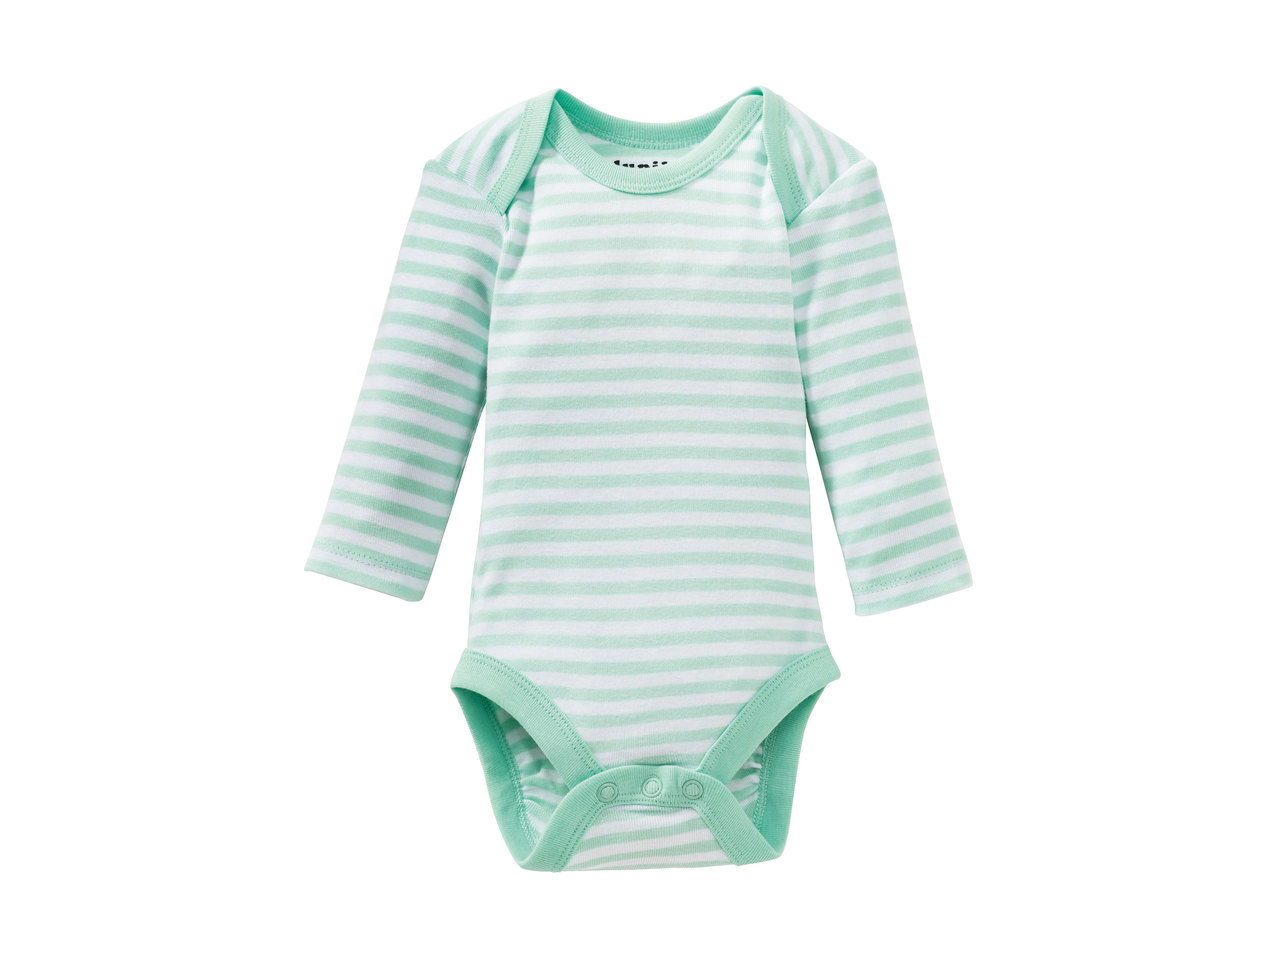 Lupilu Long Sleeve Baby Bodysuits1